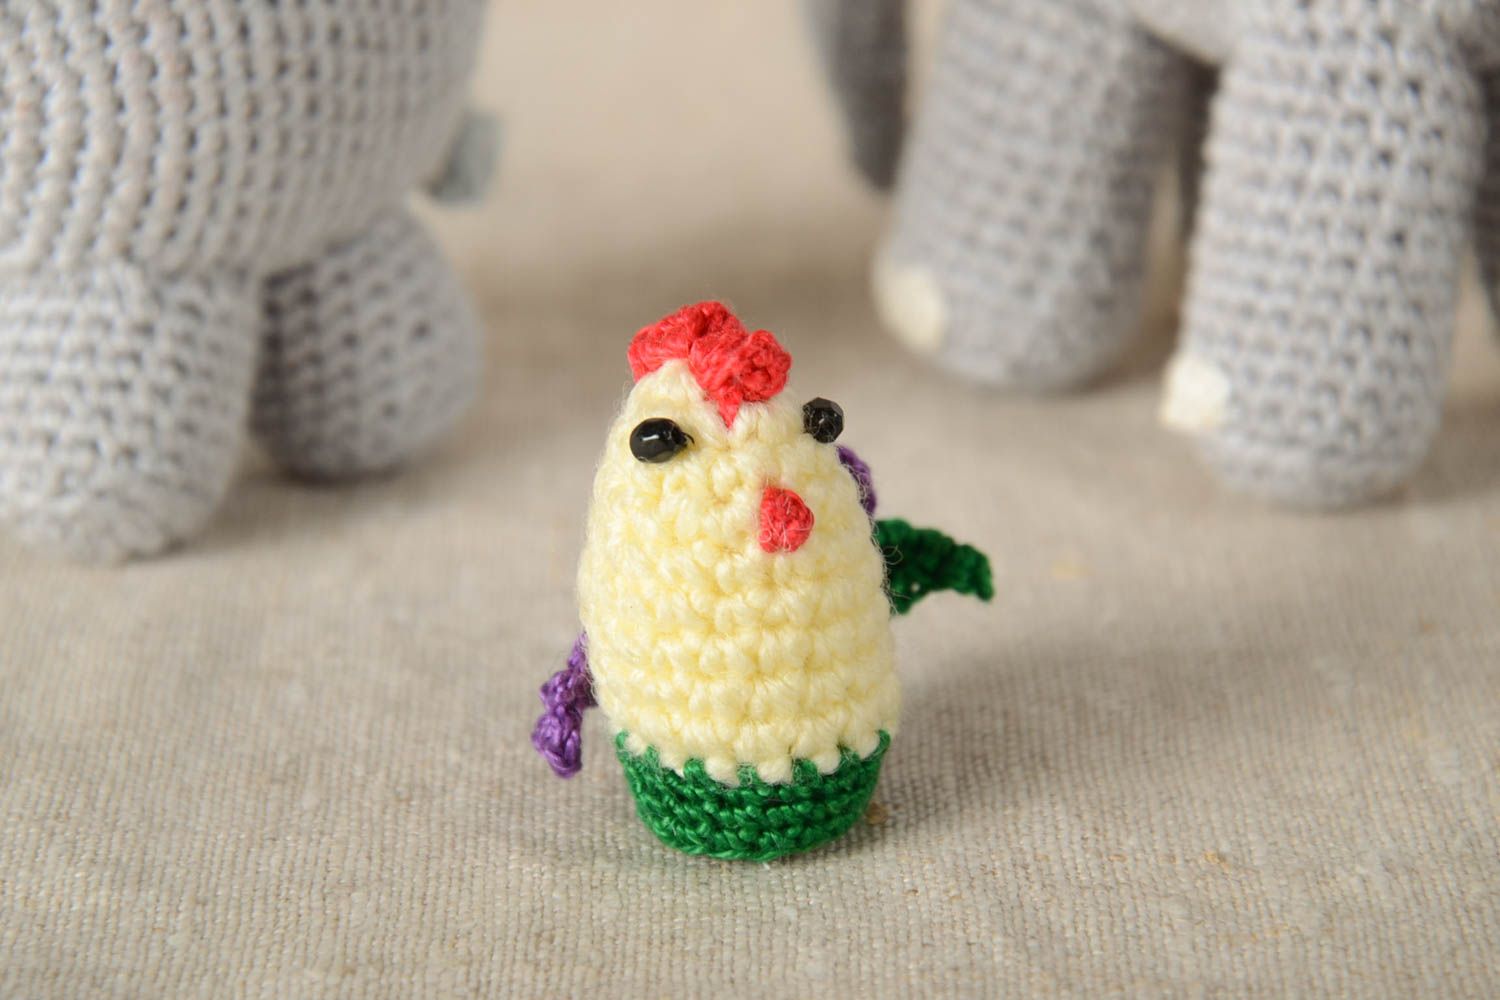 Handmade toy designer toy animal toy gift for baby nursery decor crocheted toy photo 1